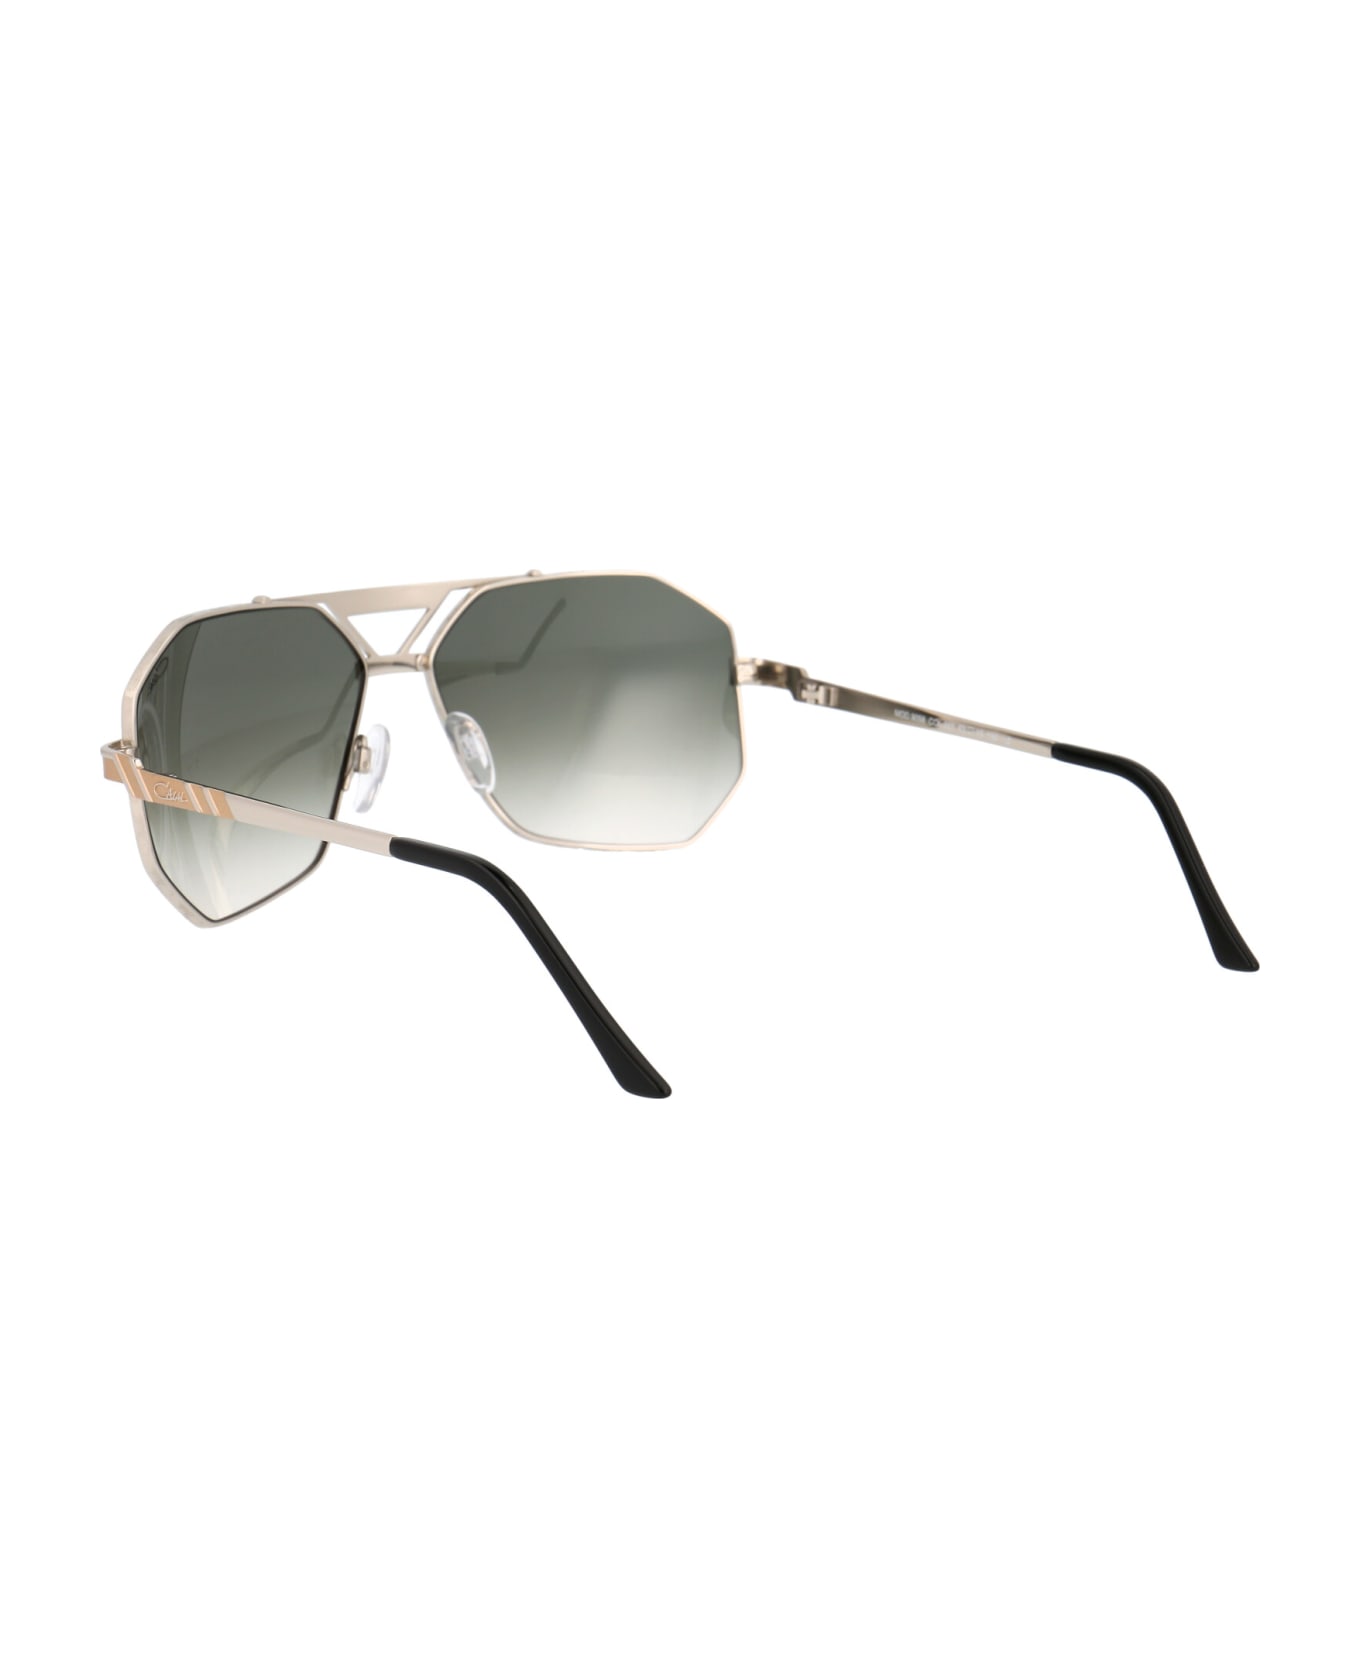 Cazal Mod. 9058 Sunglasses - 003 SILVER サングラス